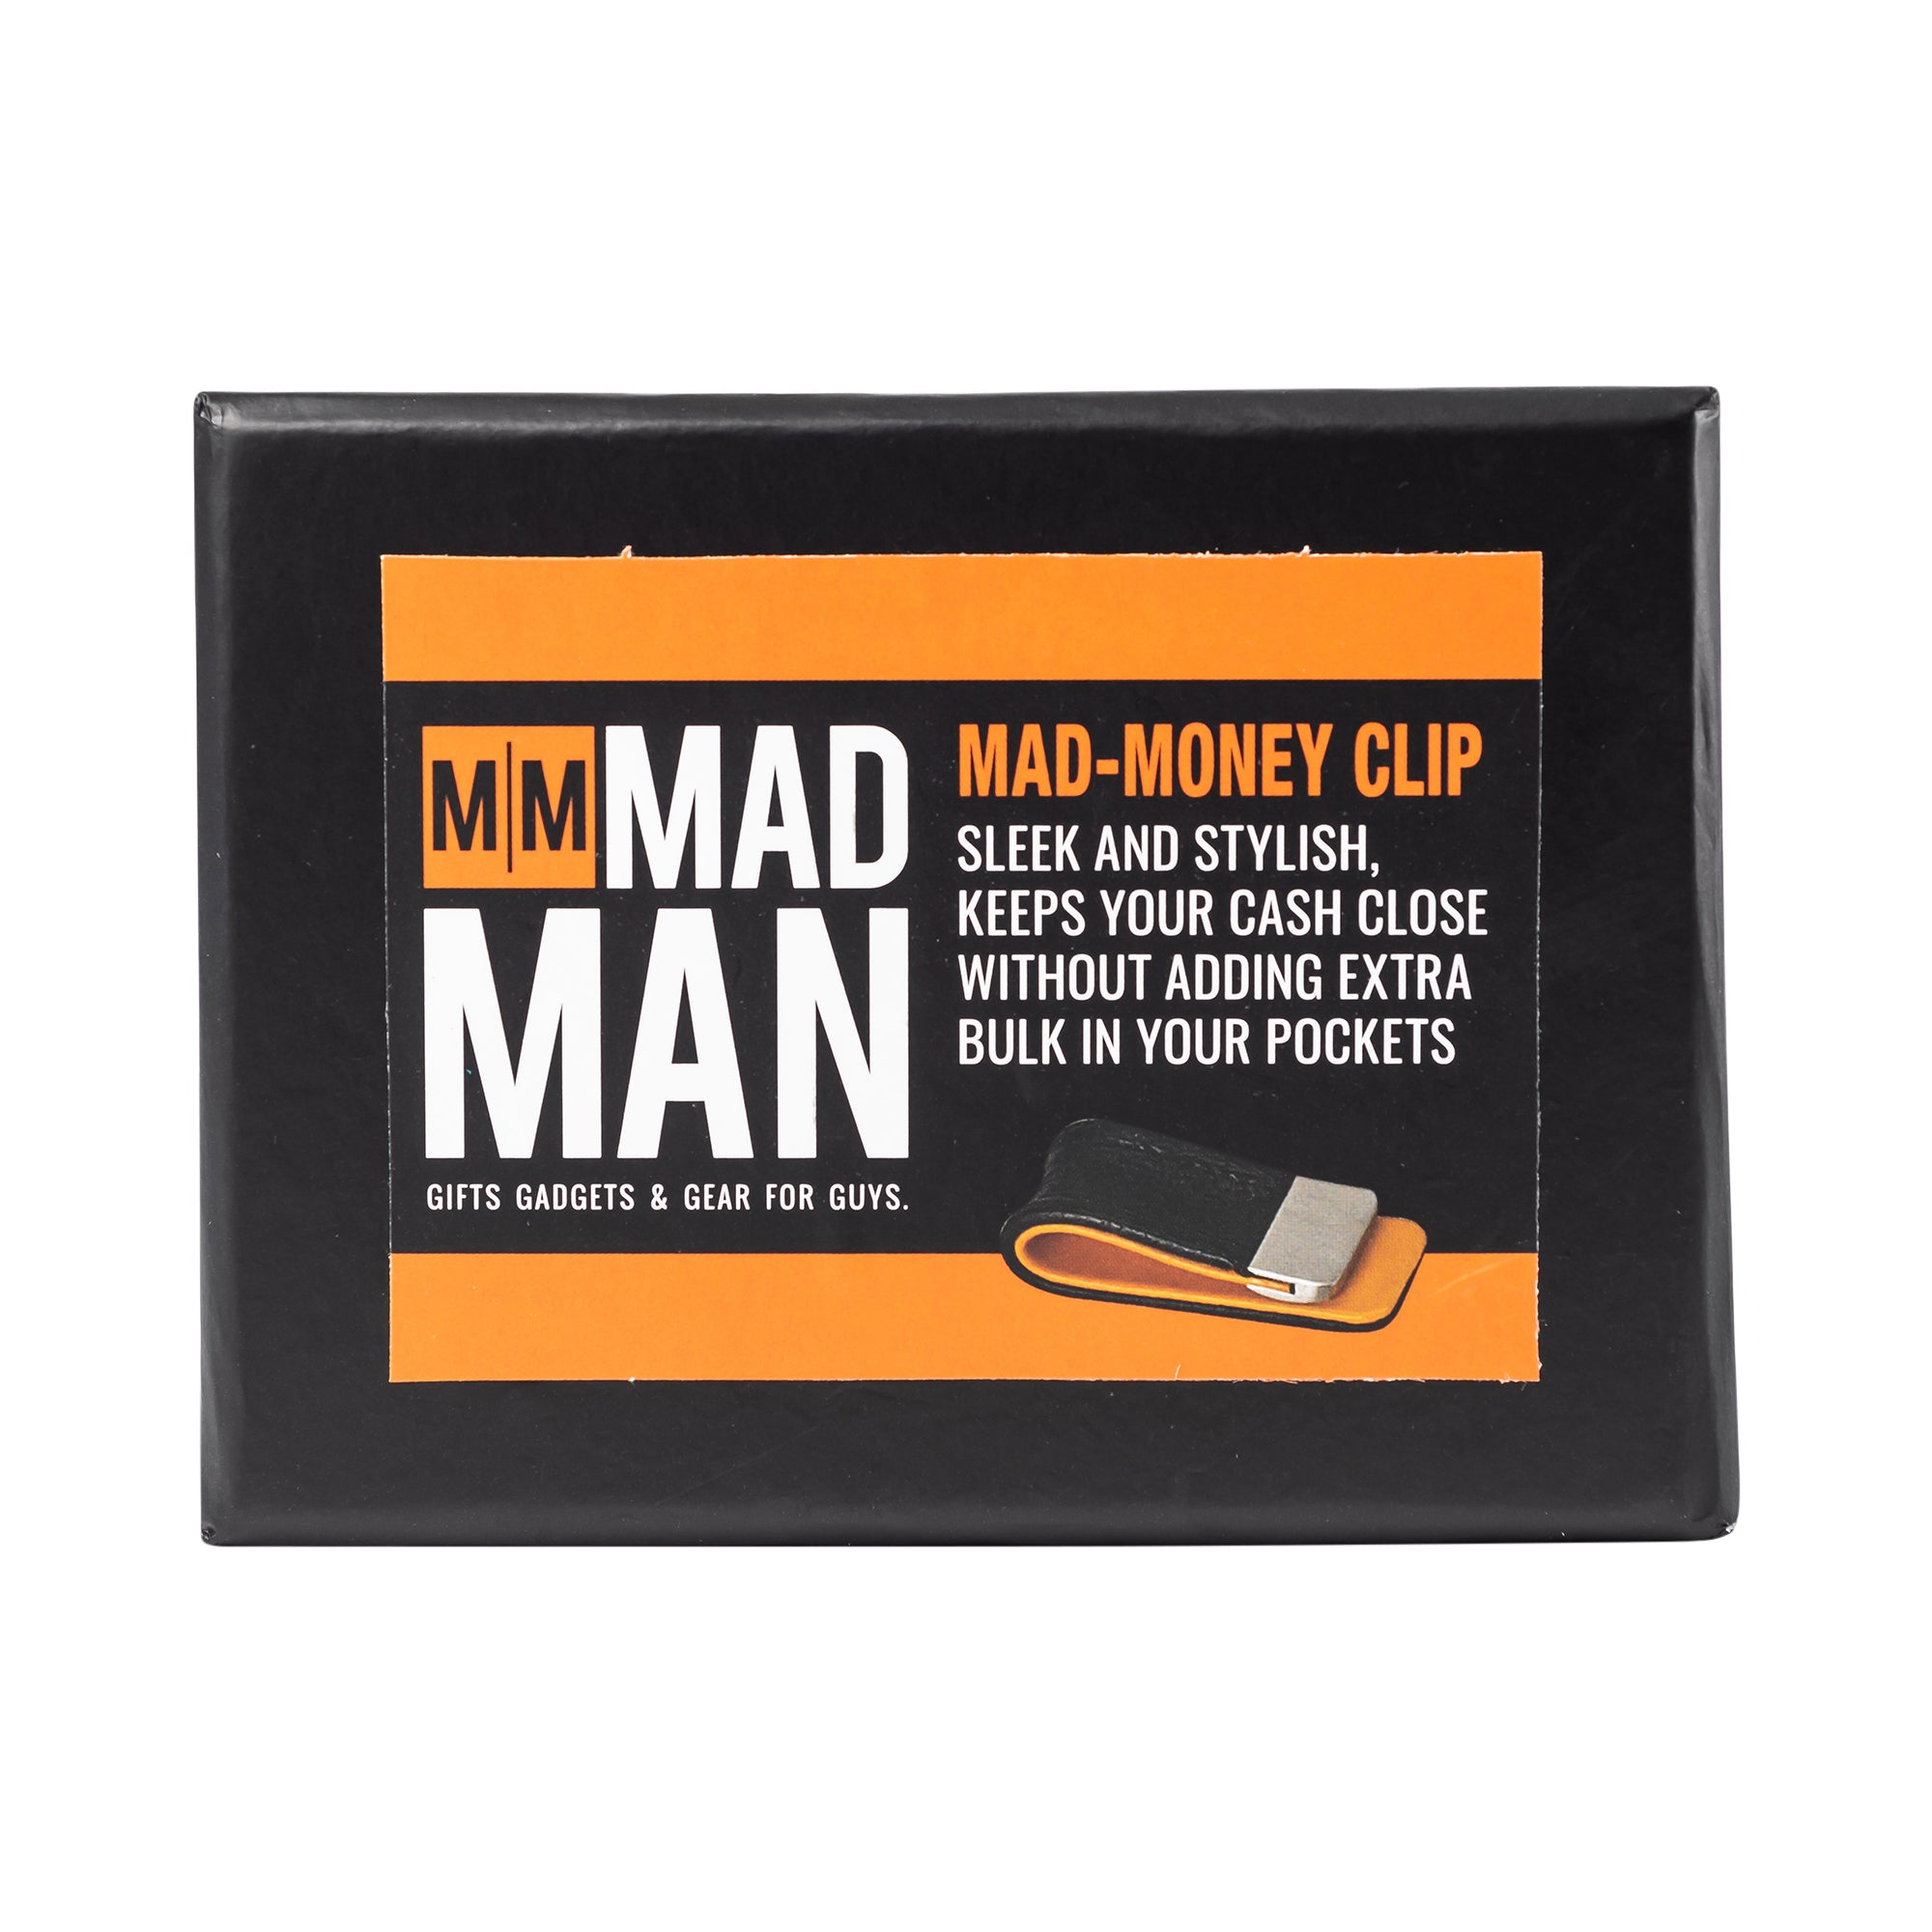 Mad-Money Clip